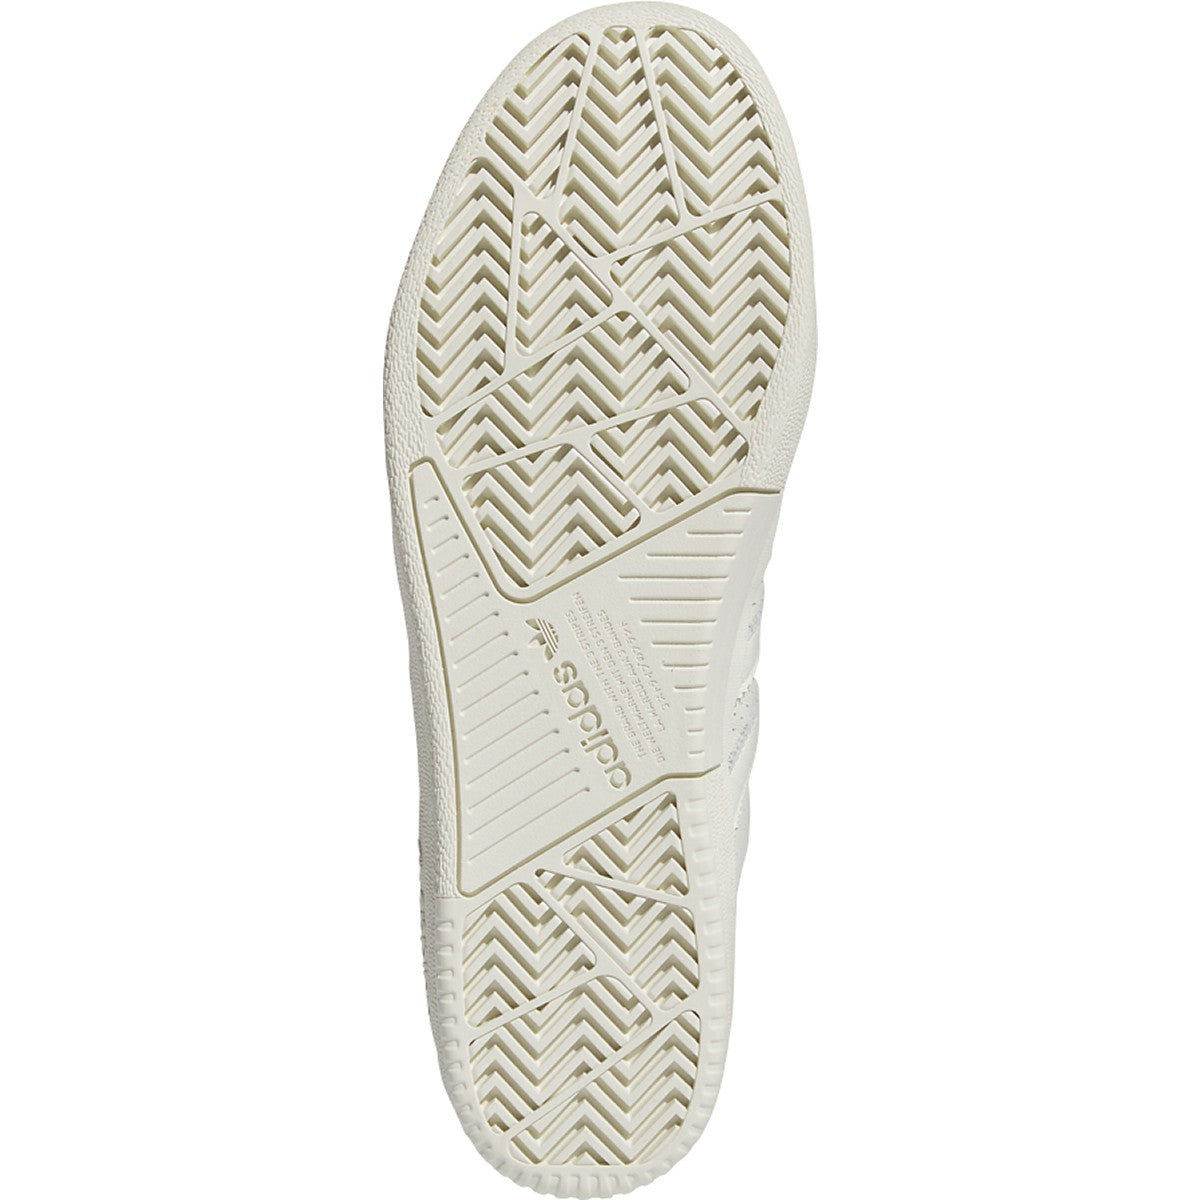 Ivory Tyshawn Adidas Skateboard Shoe Bottom